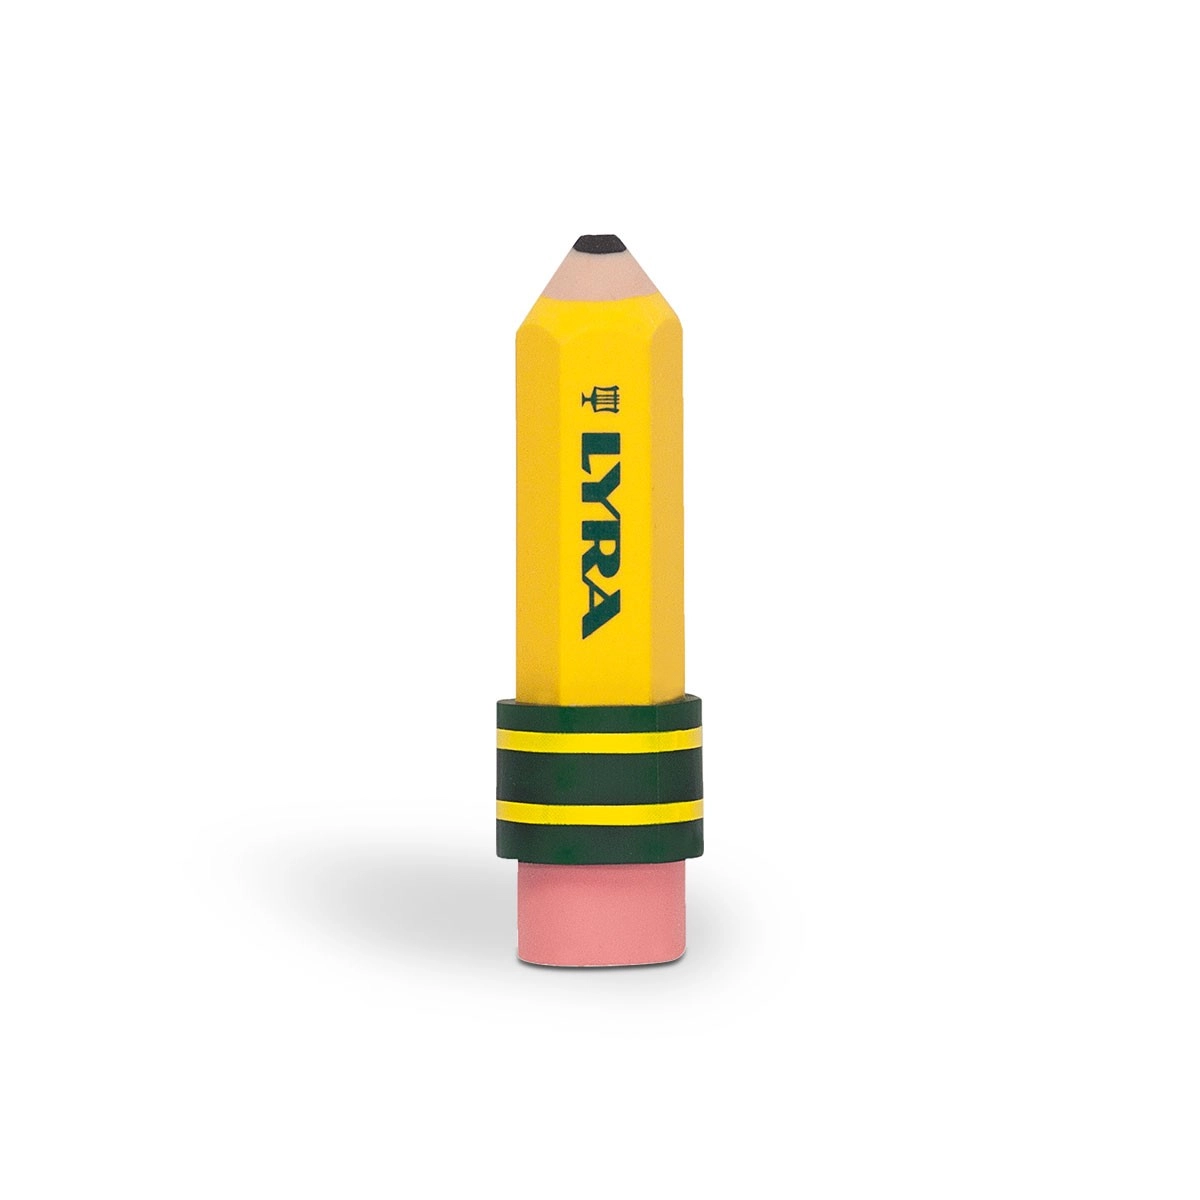 Lyra kneadable eraser Medium - Fila International